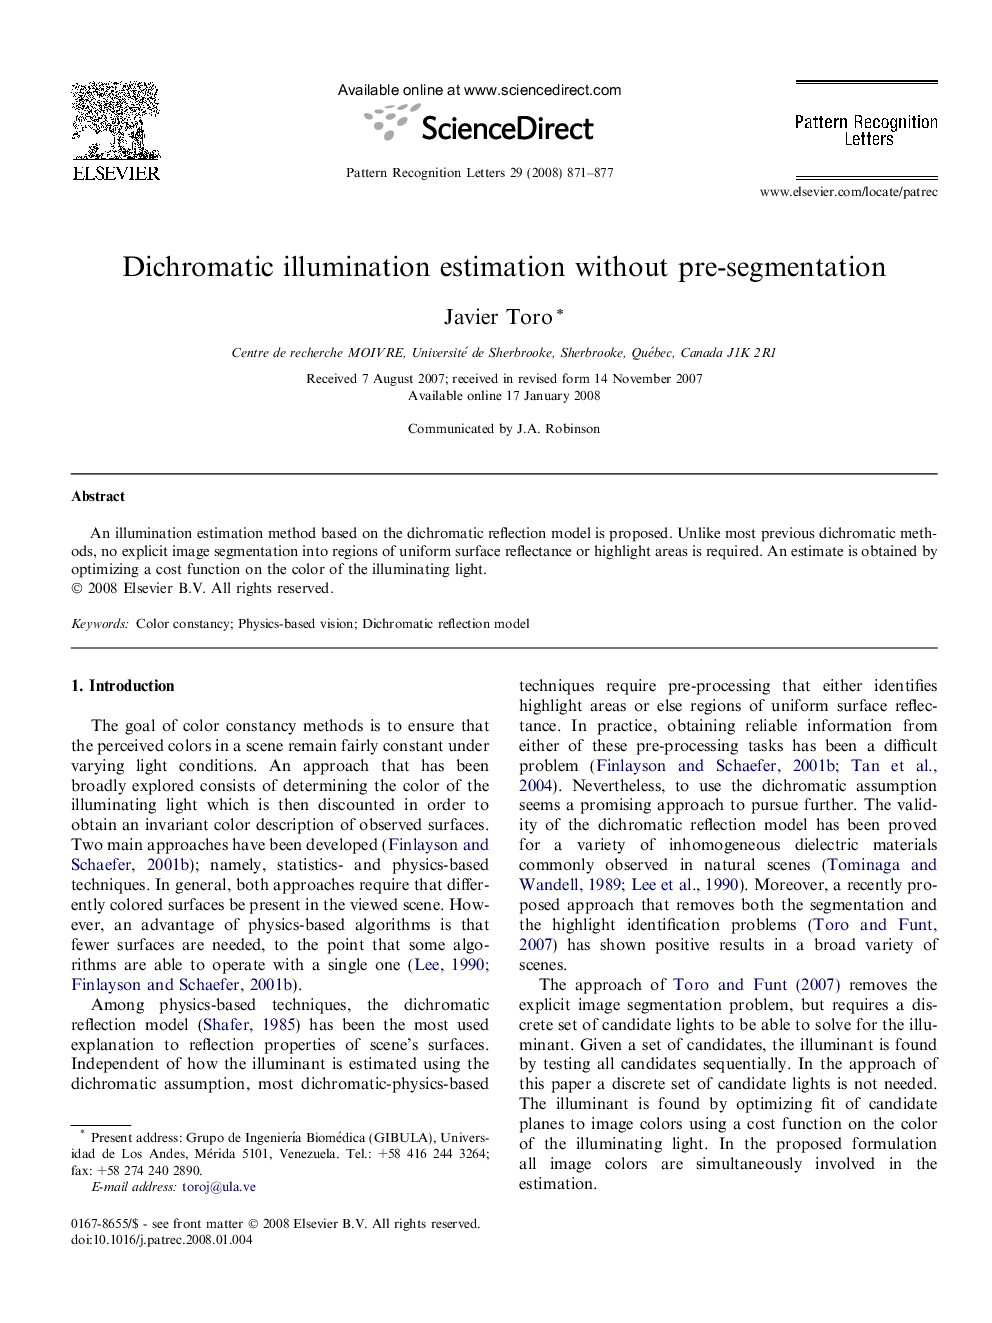 Dichromatic illumination estimation without pre-segmentation